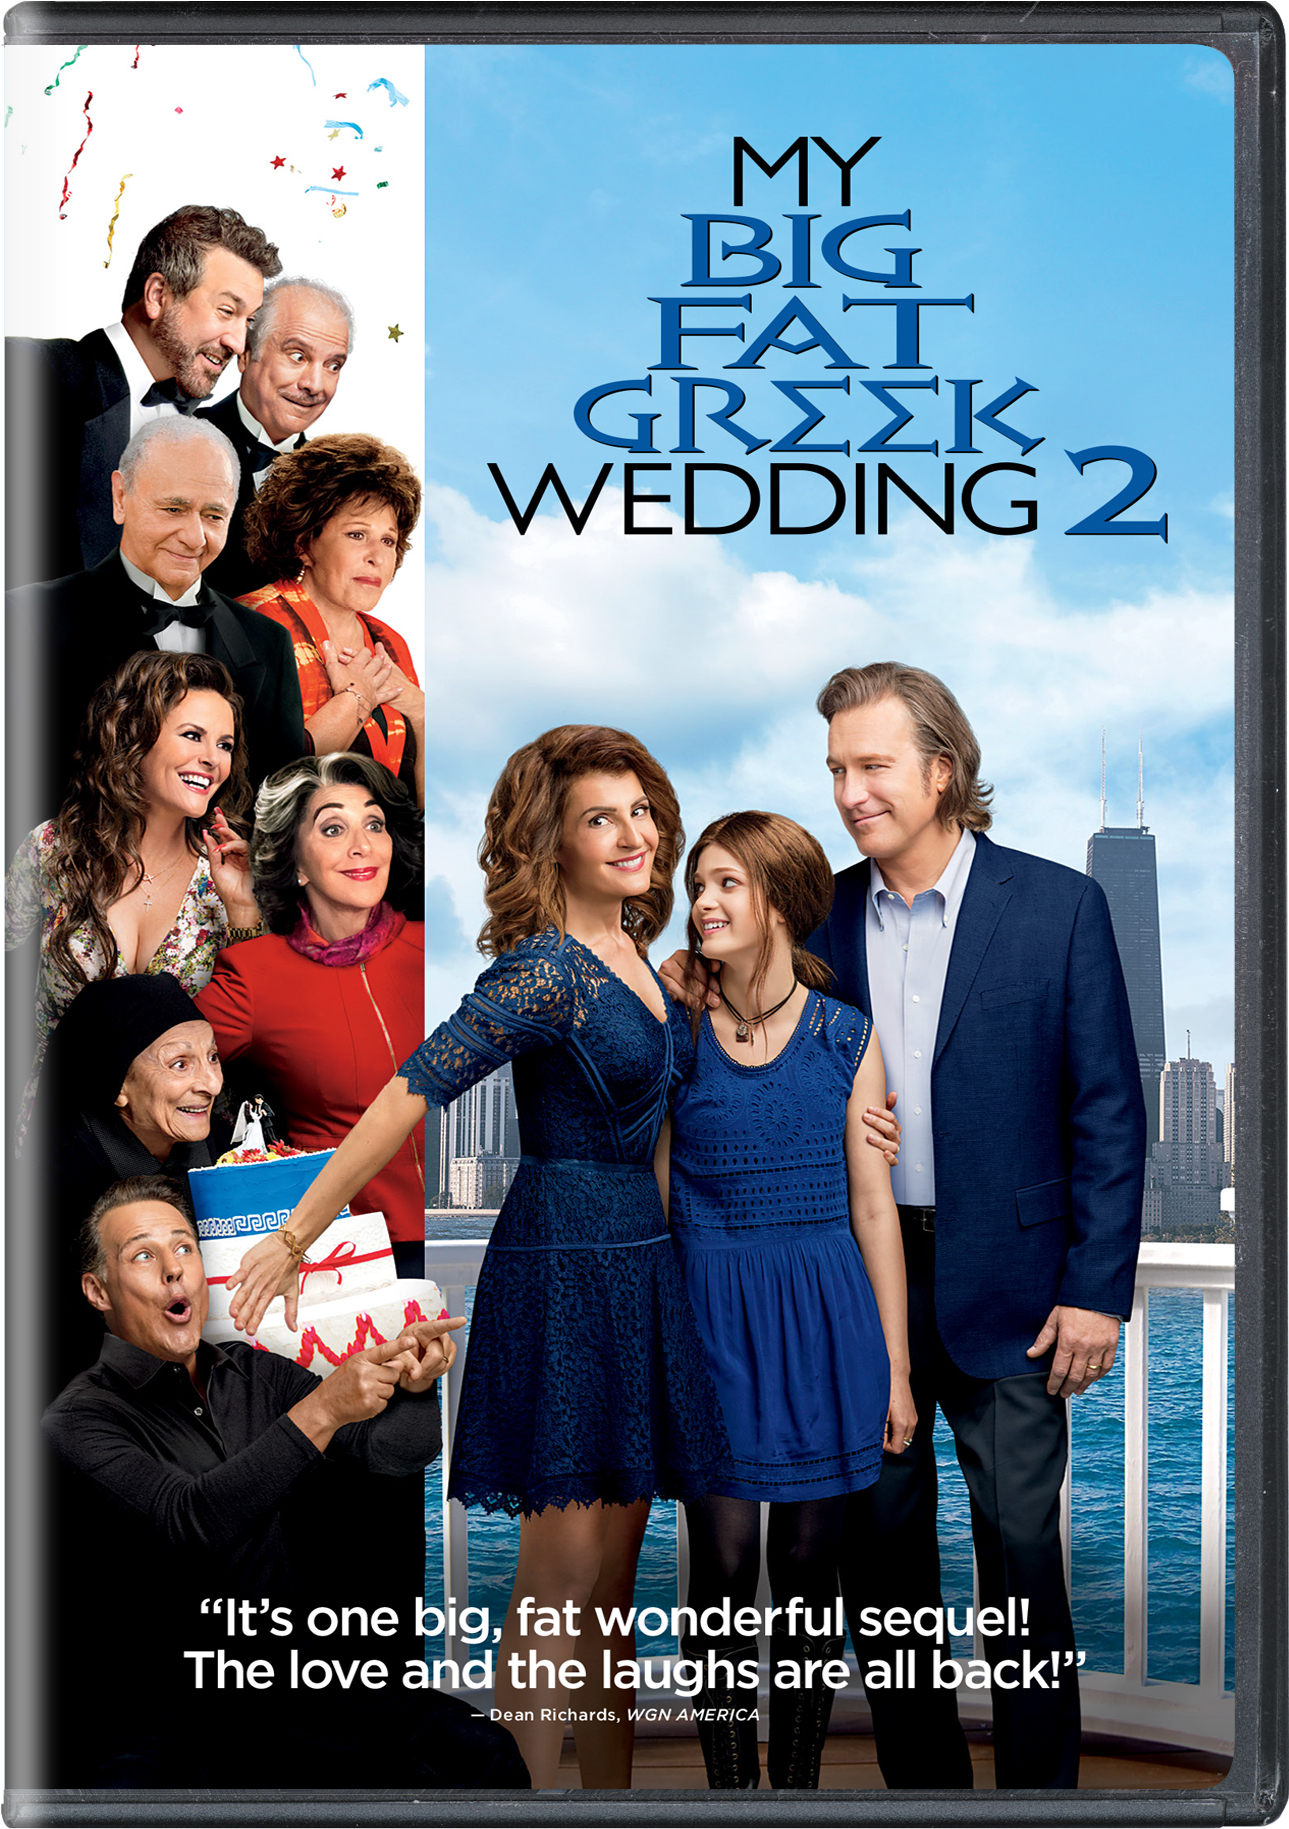 My Big Fat Greek Wedding 2 - DVD [ 2016 ]  - Comedy Movies On DVD - Movies On GRUV